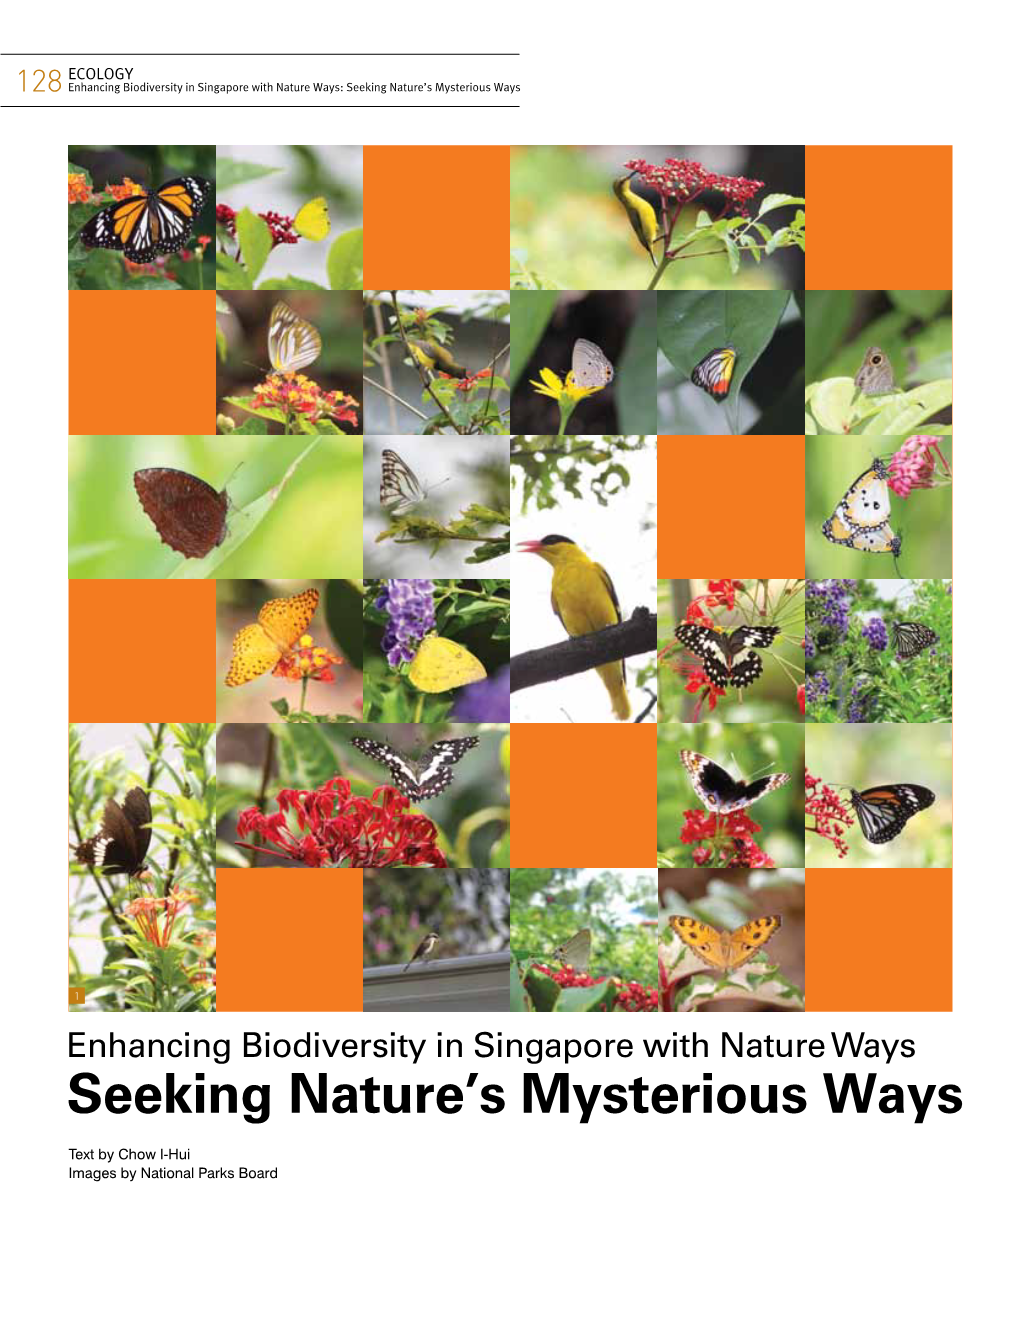 Seeking Nature's Mysterious Ways